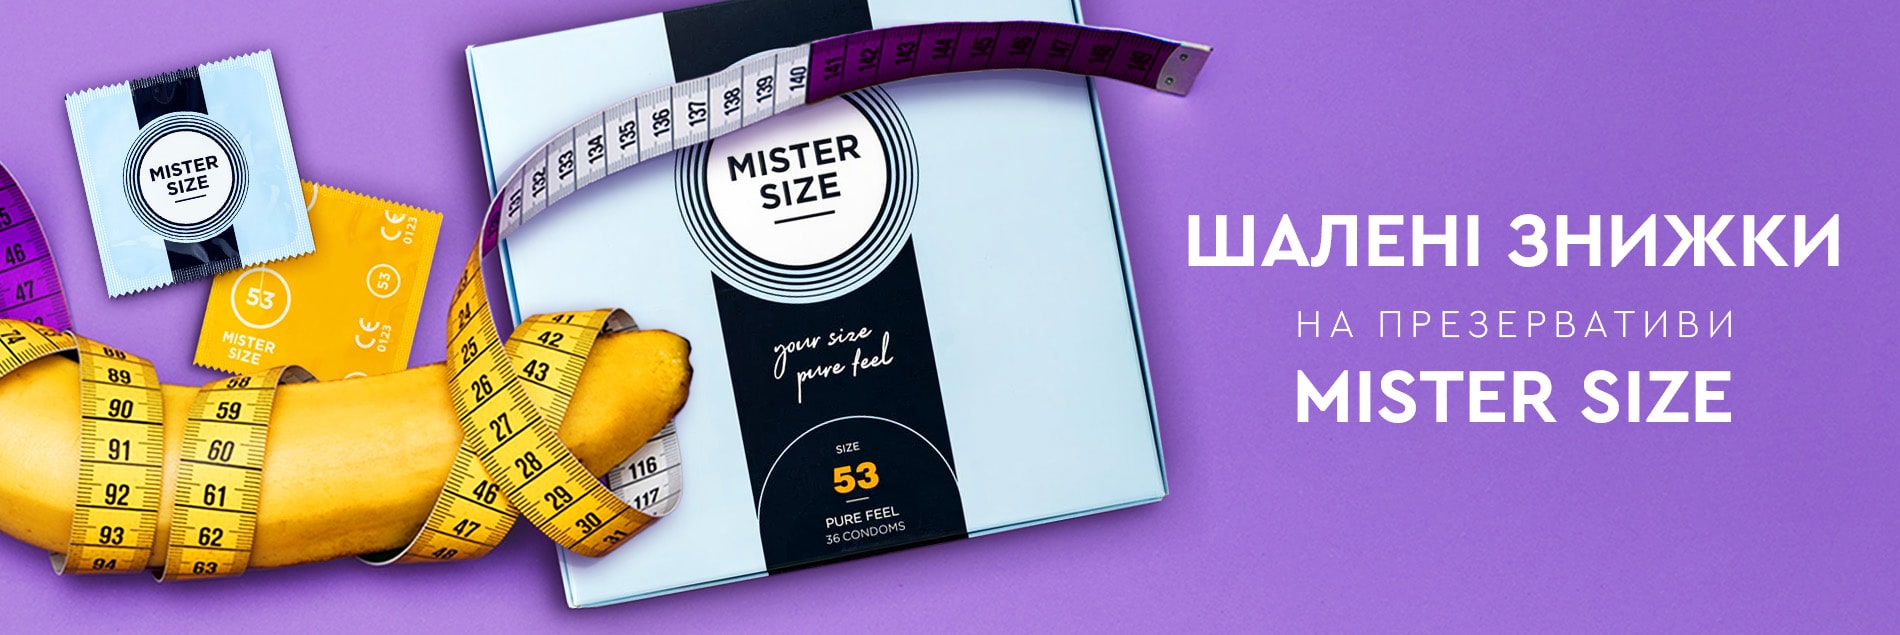 секс шоп - Mister Size